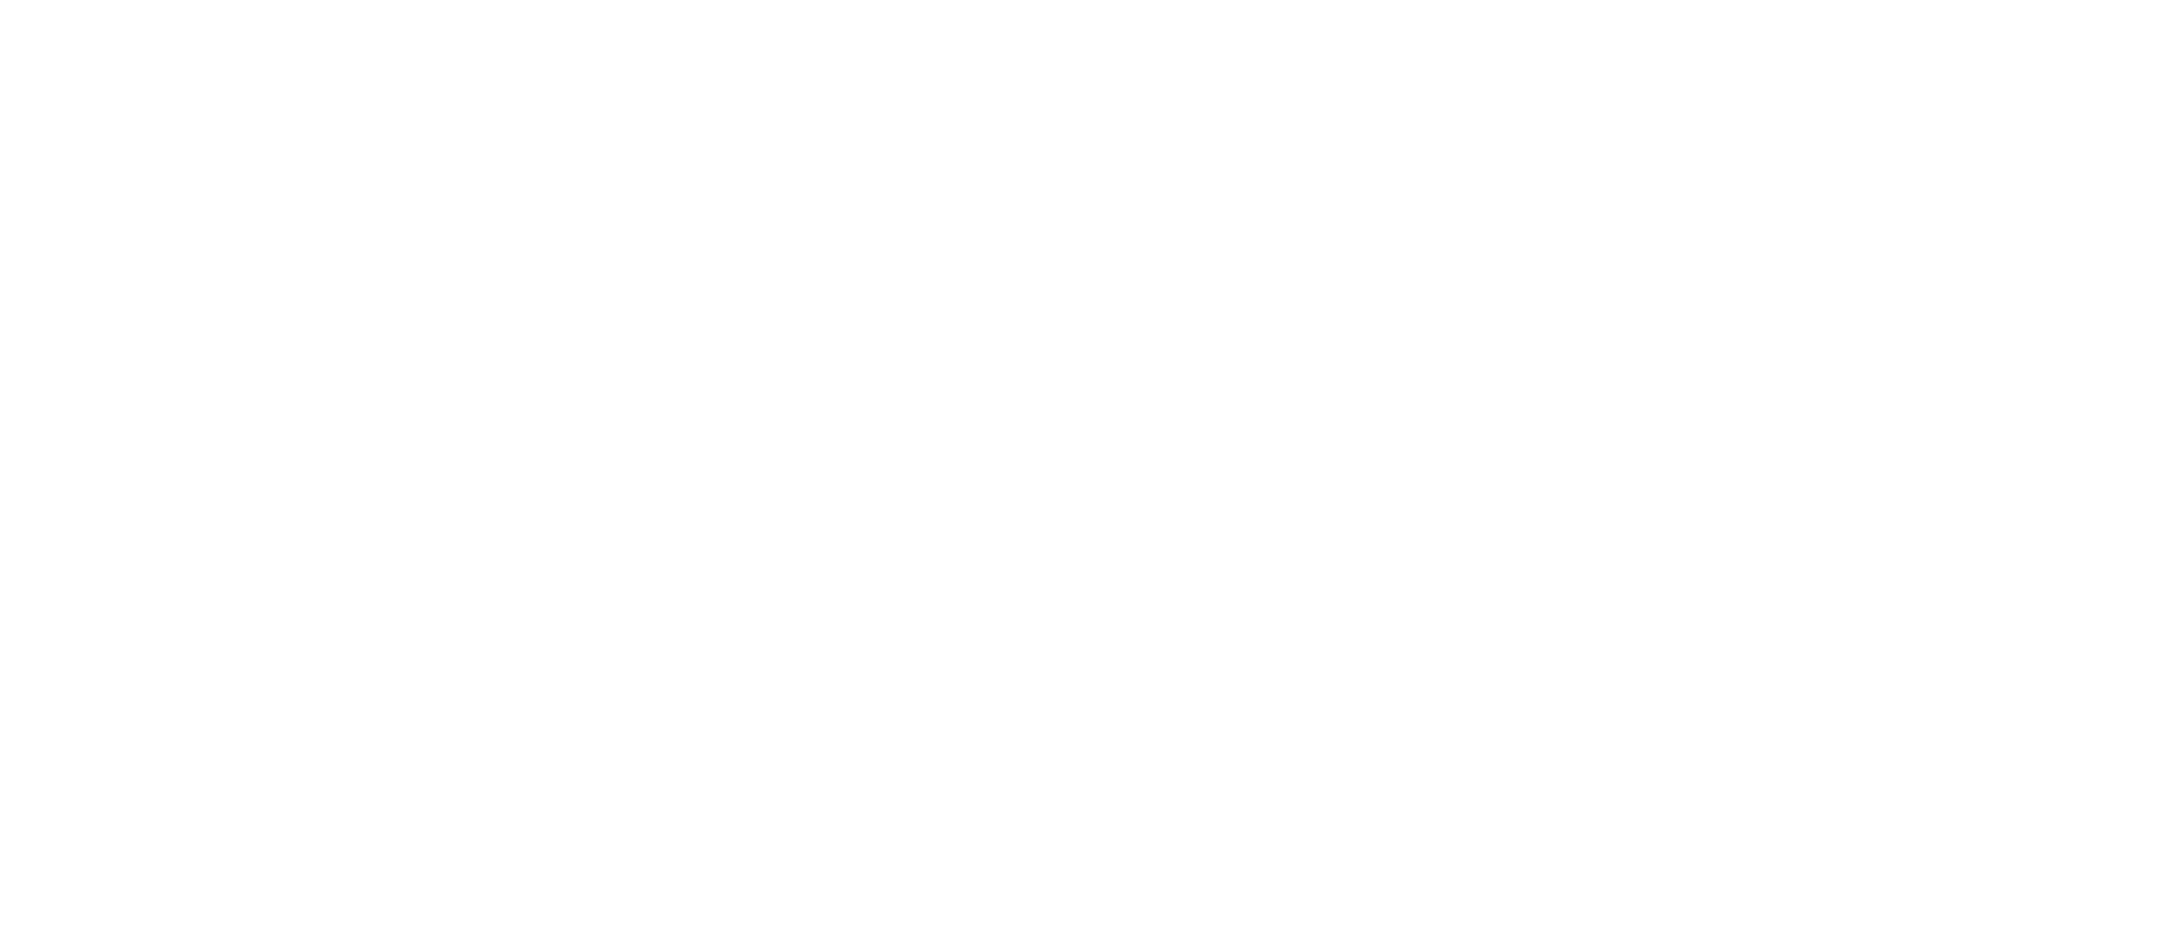 Children's Advocacy - Nottinghamshire logo in white